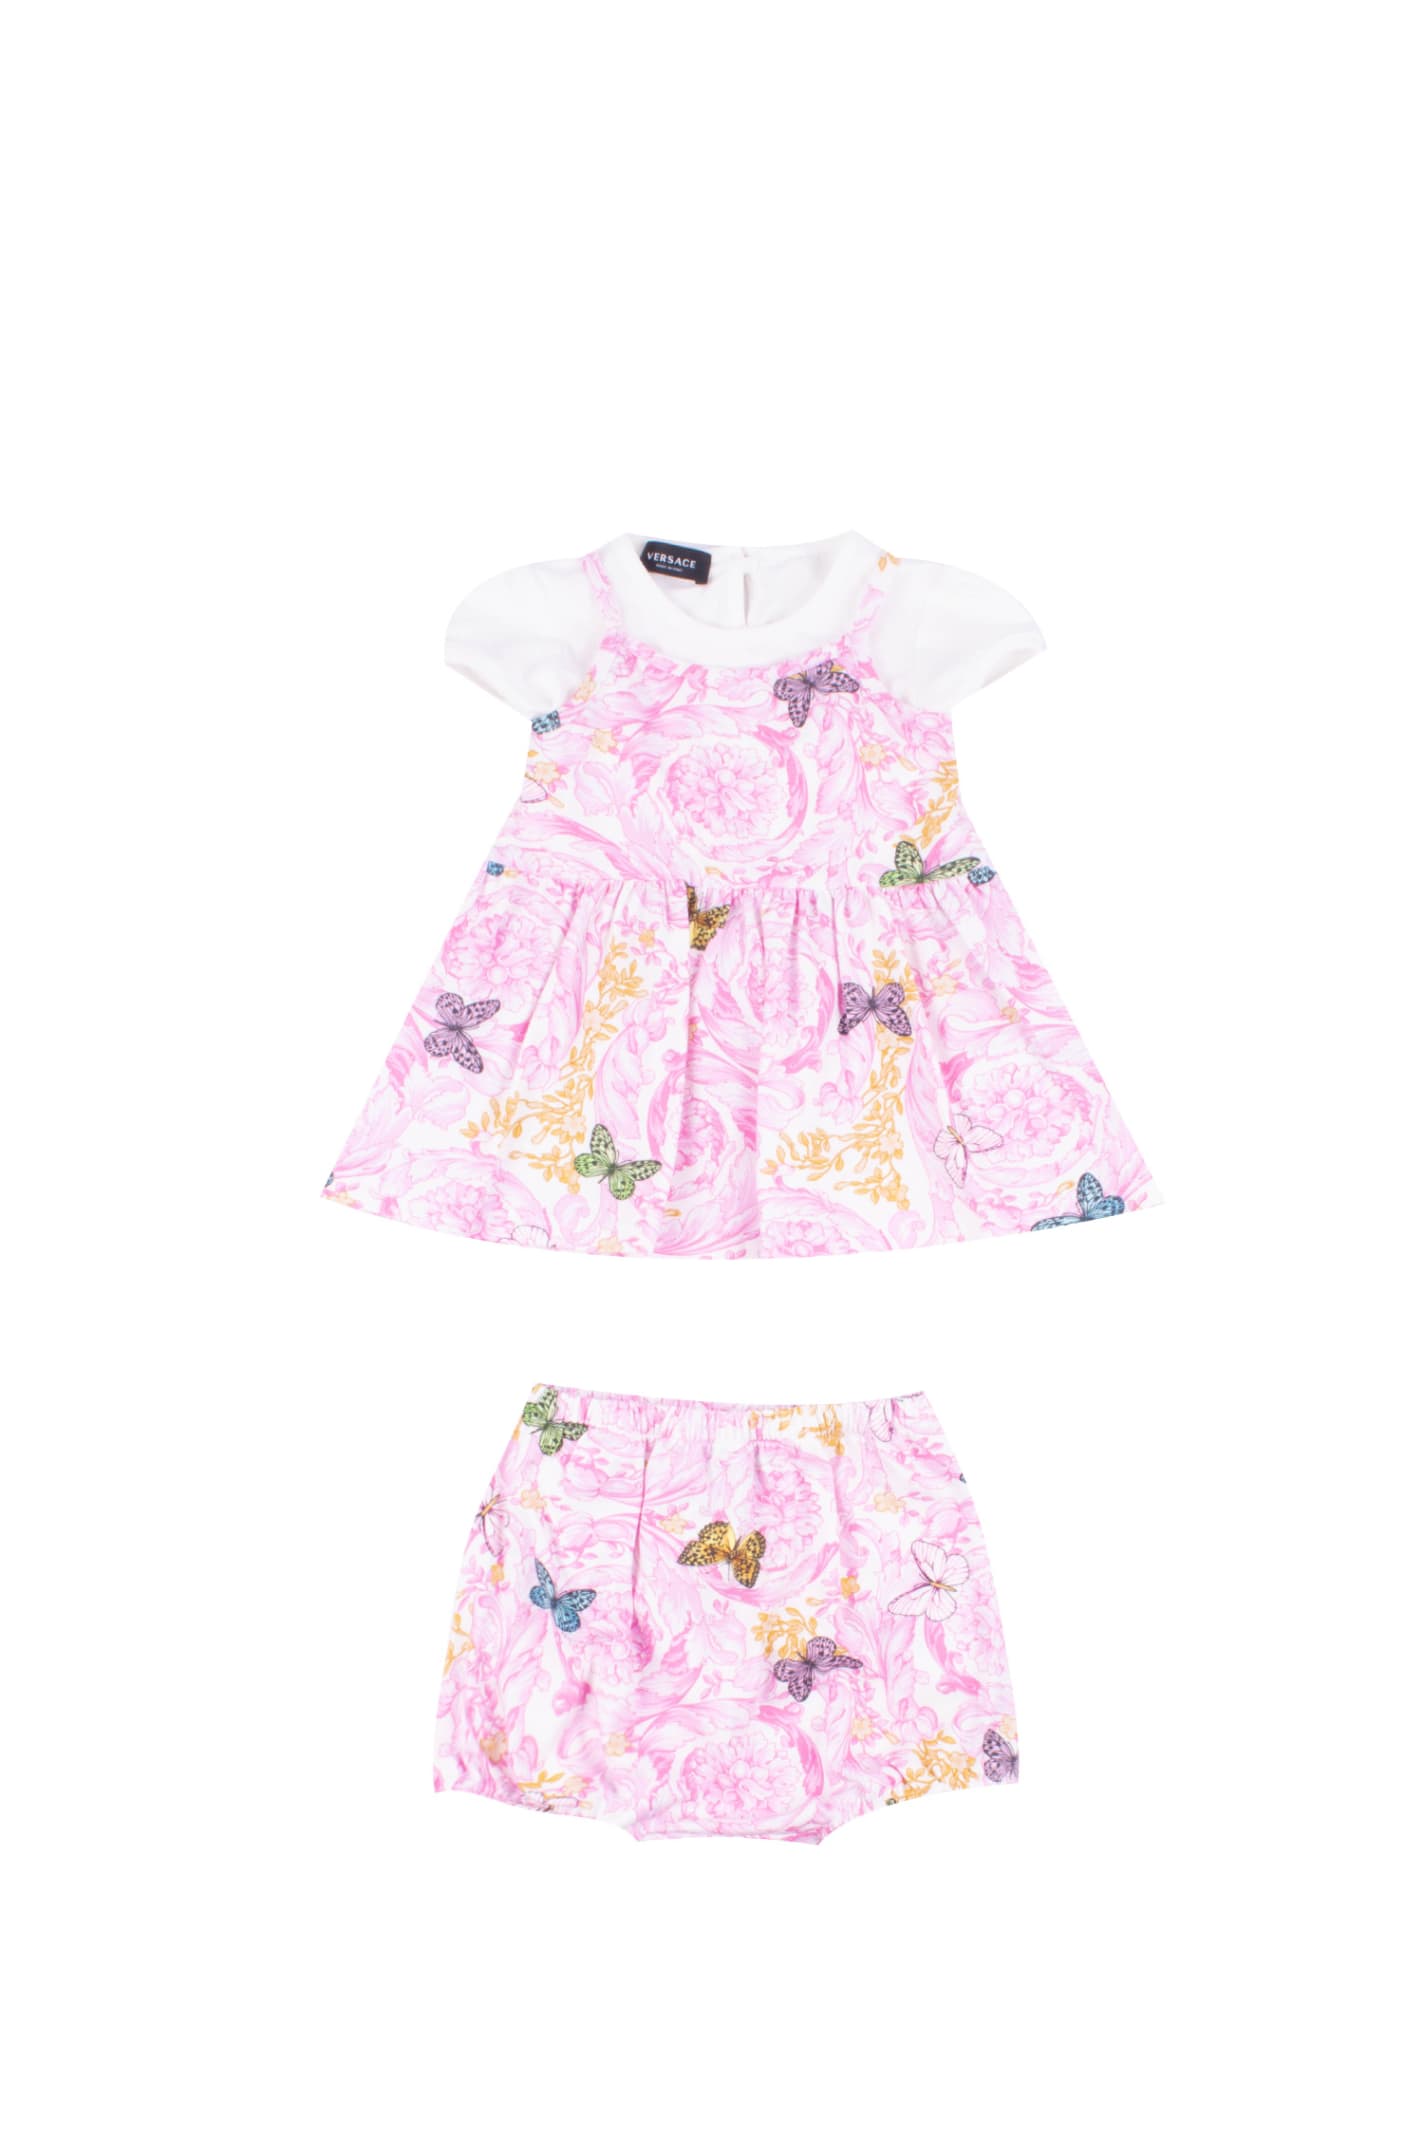 Versace Babies' Baroque Butterfly Dress Set In Rose